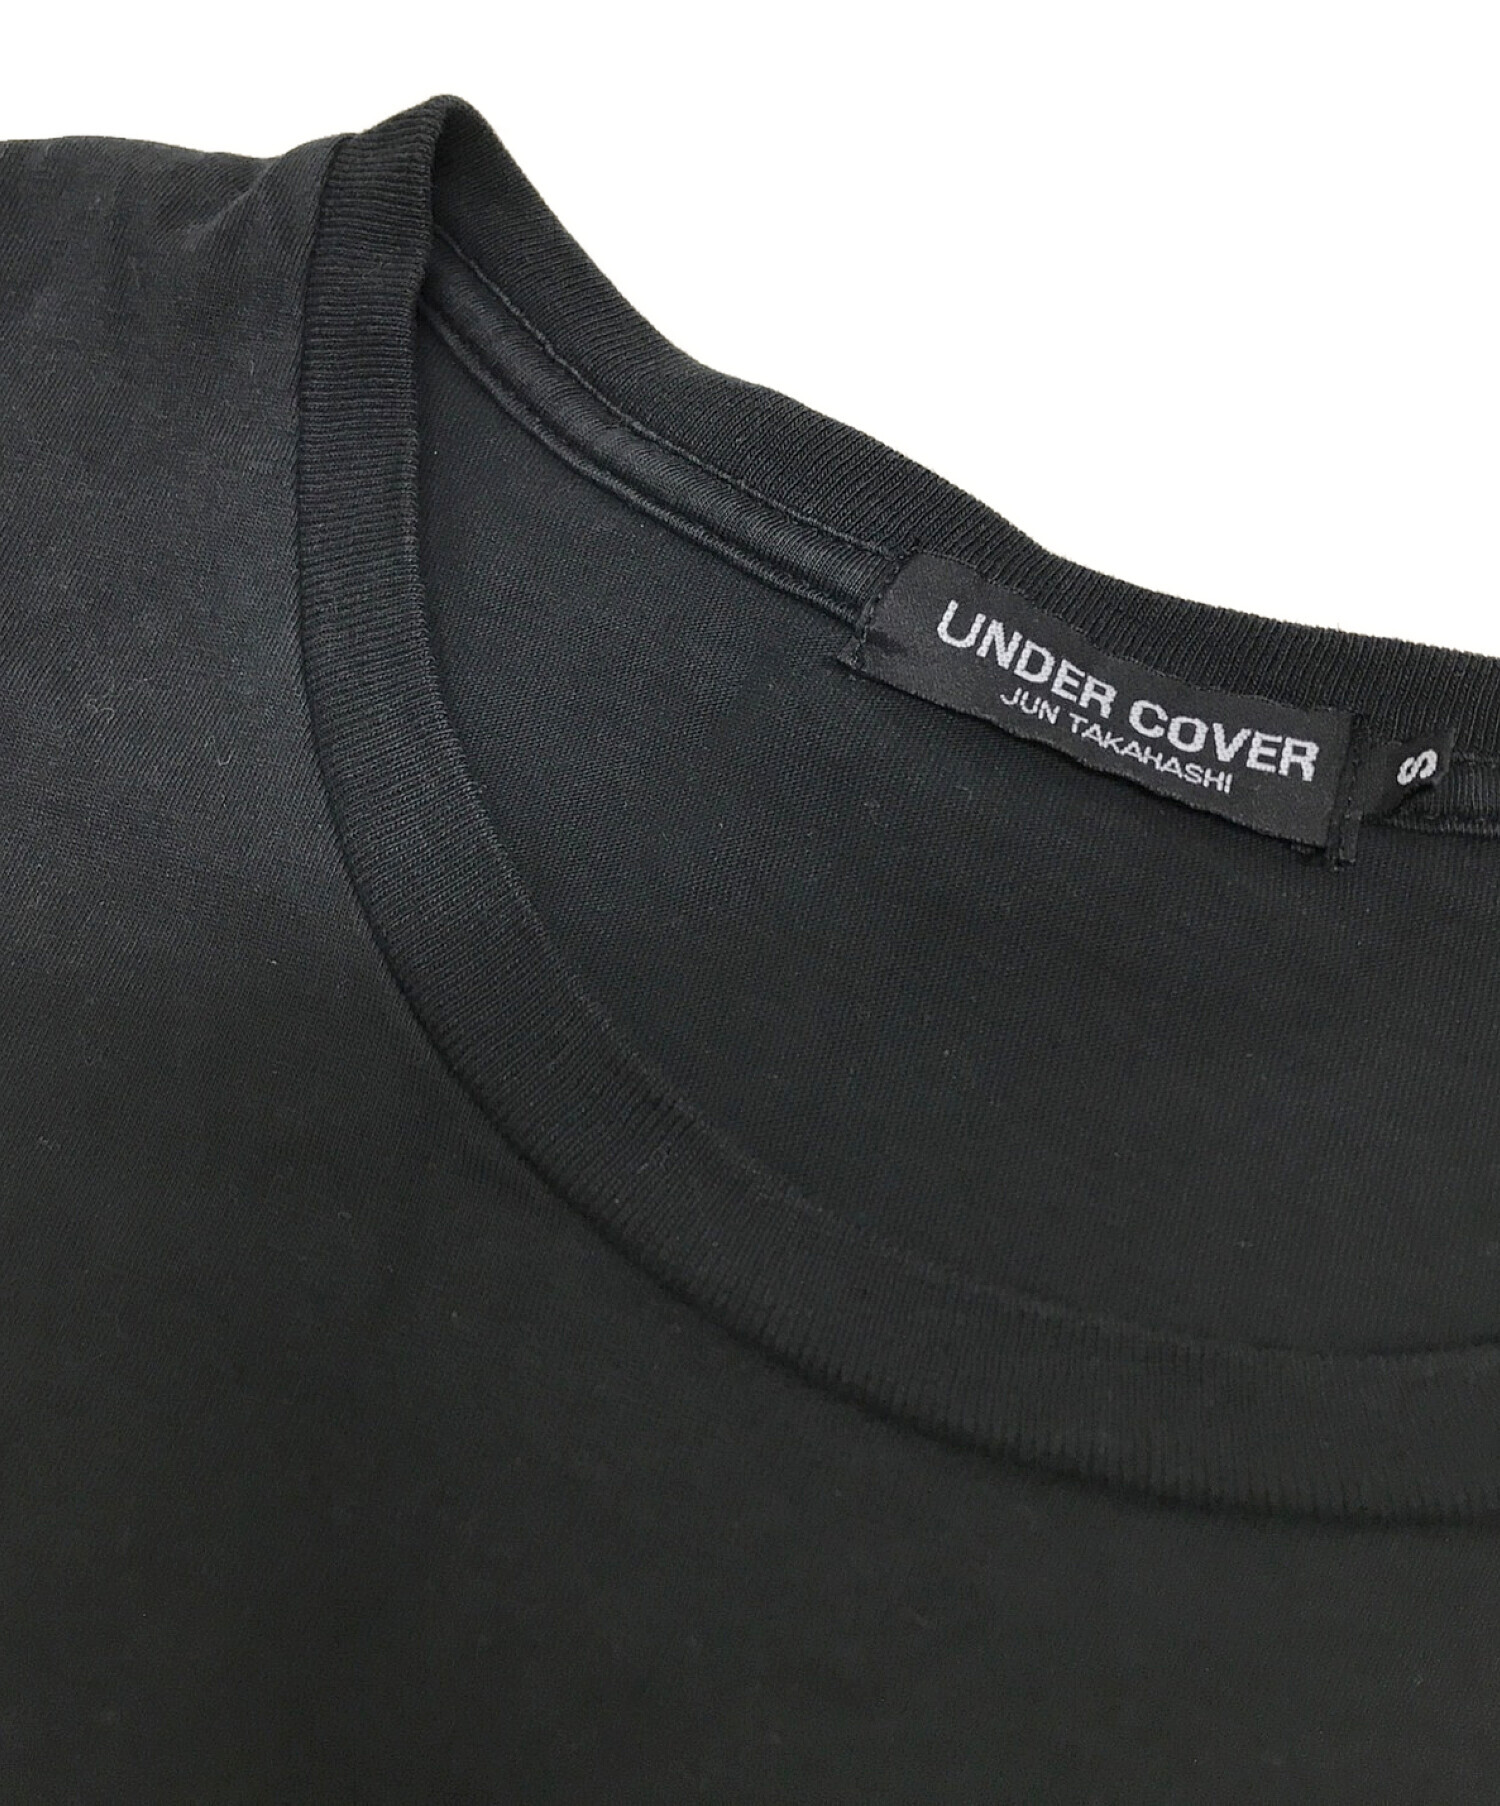 UNDERCOVER (アンダーカバー) WE MAKE NOISE NOT CLOTHESプリントTシャツ ブラック サイズ:S